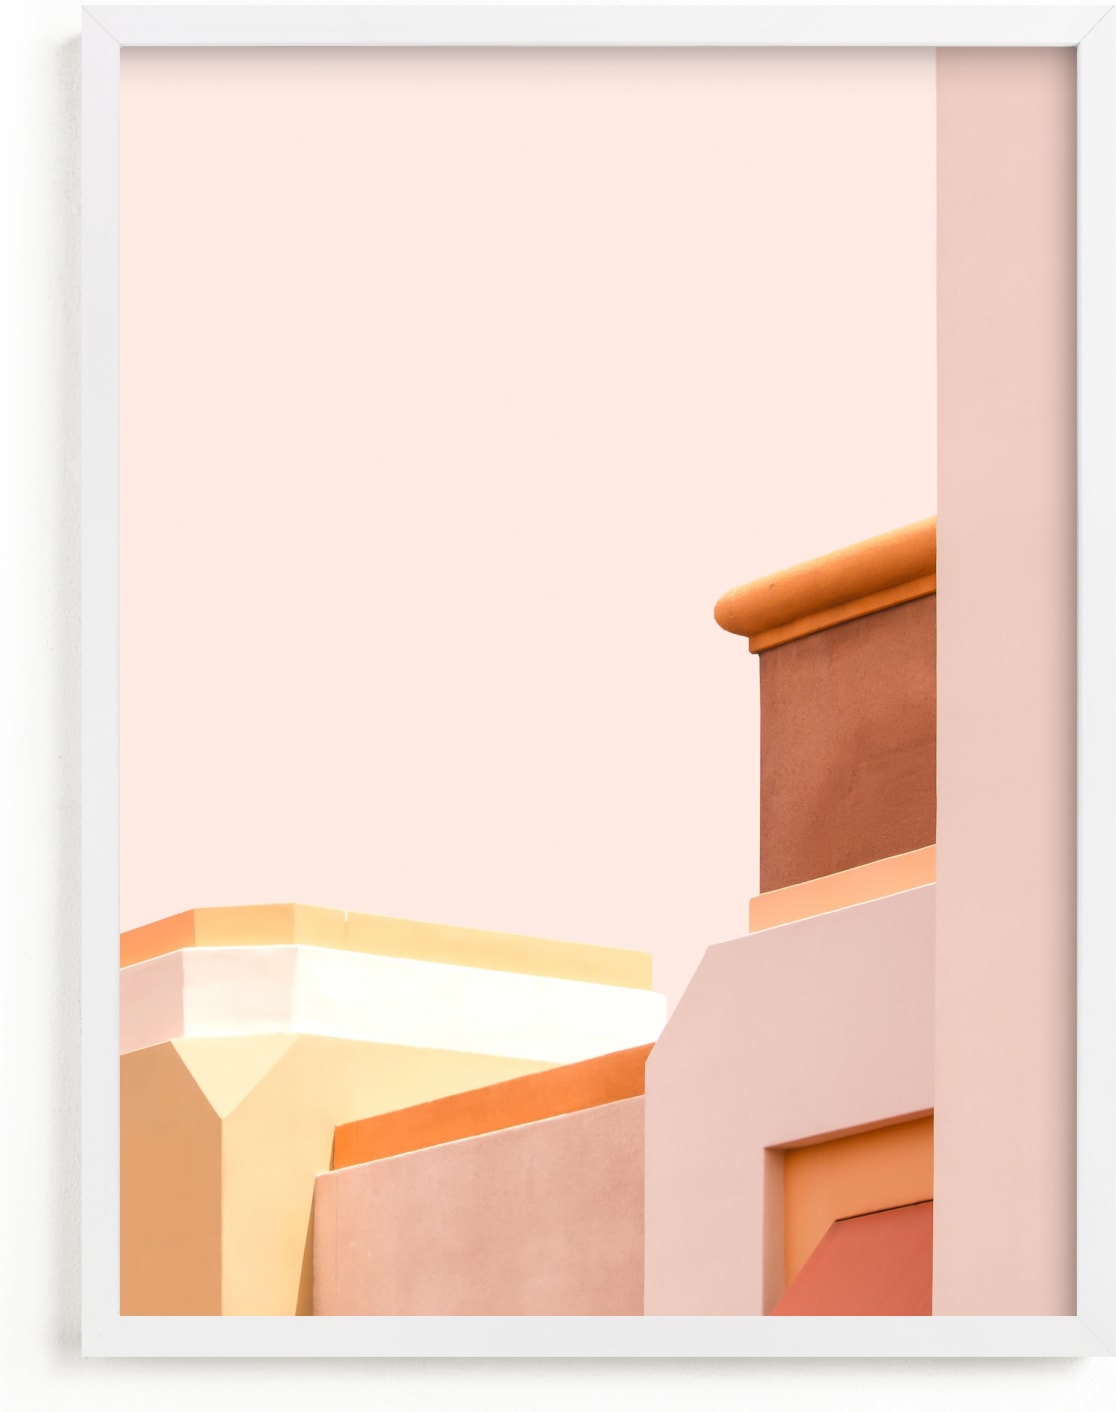 This is a pink art by Lisa Sundin called Urban Desert Series 1.